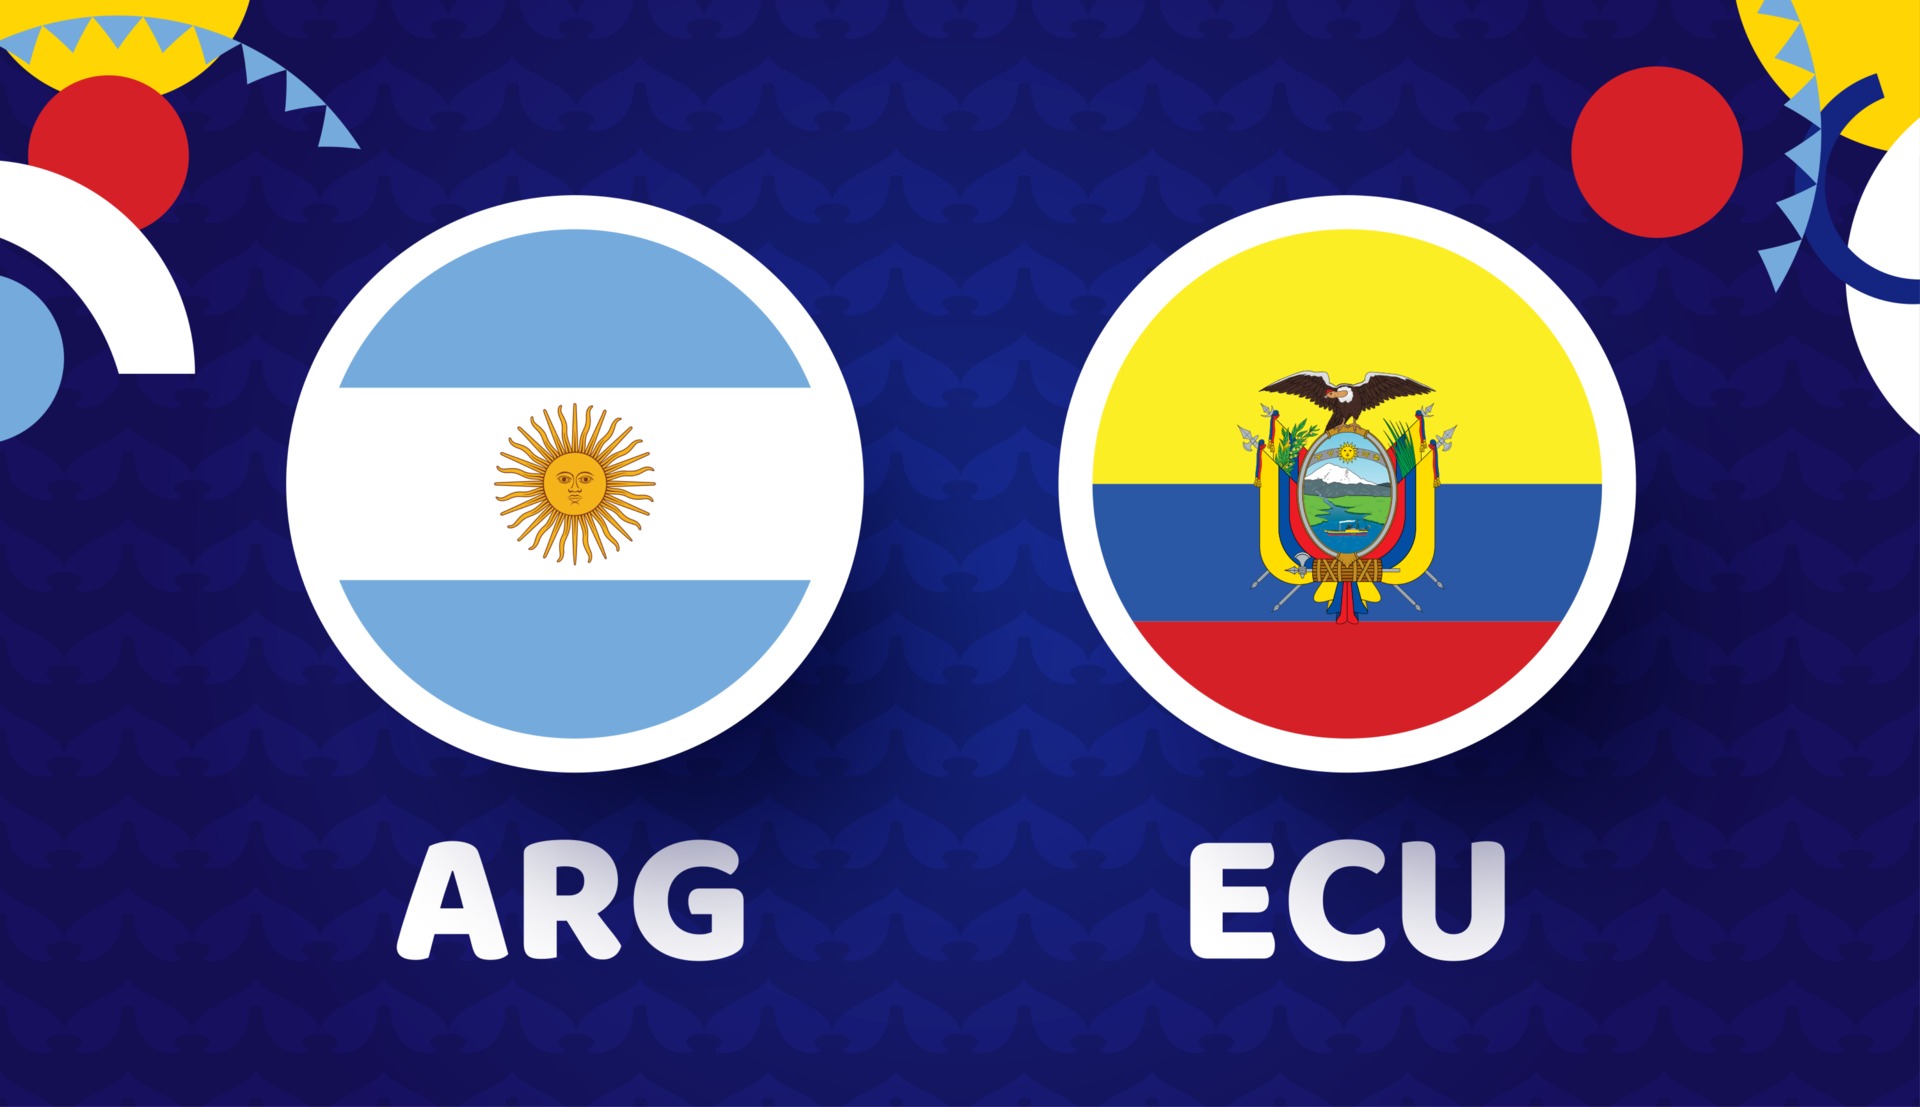 Argentina vs Ecuador match vector illustration Football 2021 championship 2886446 Vector Art at ...